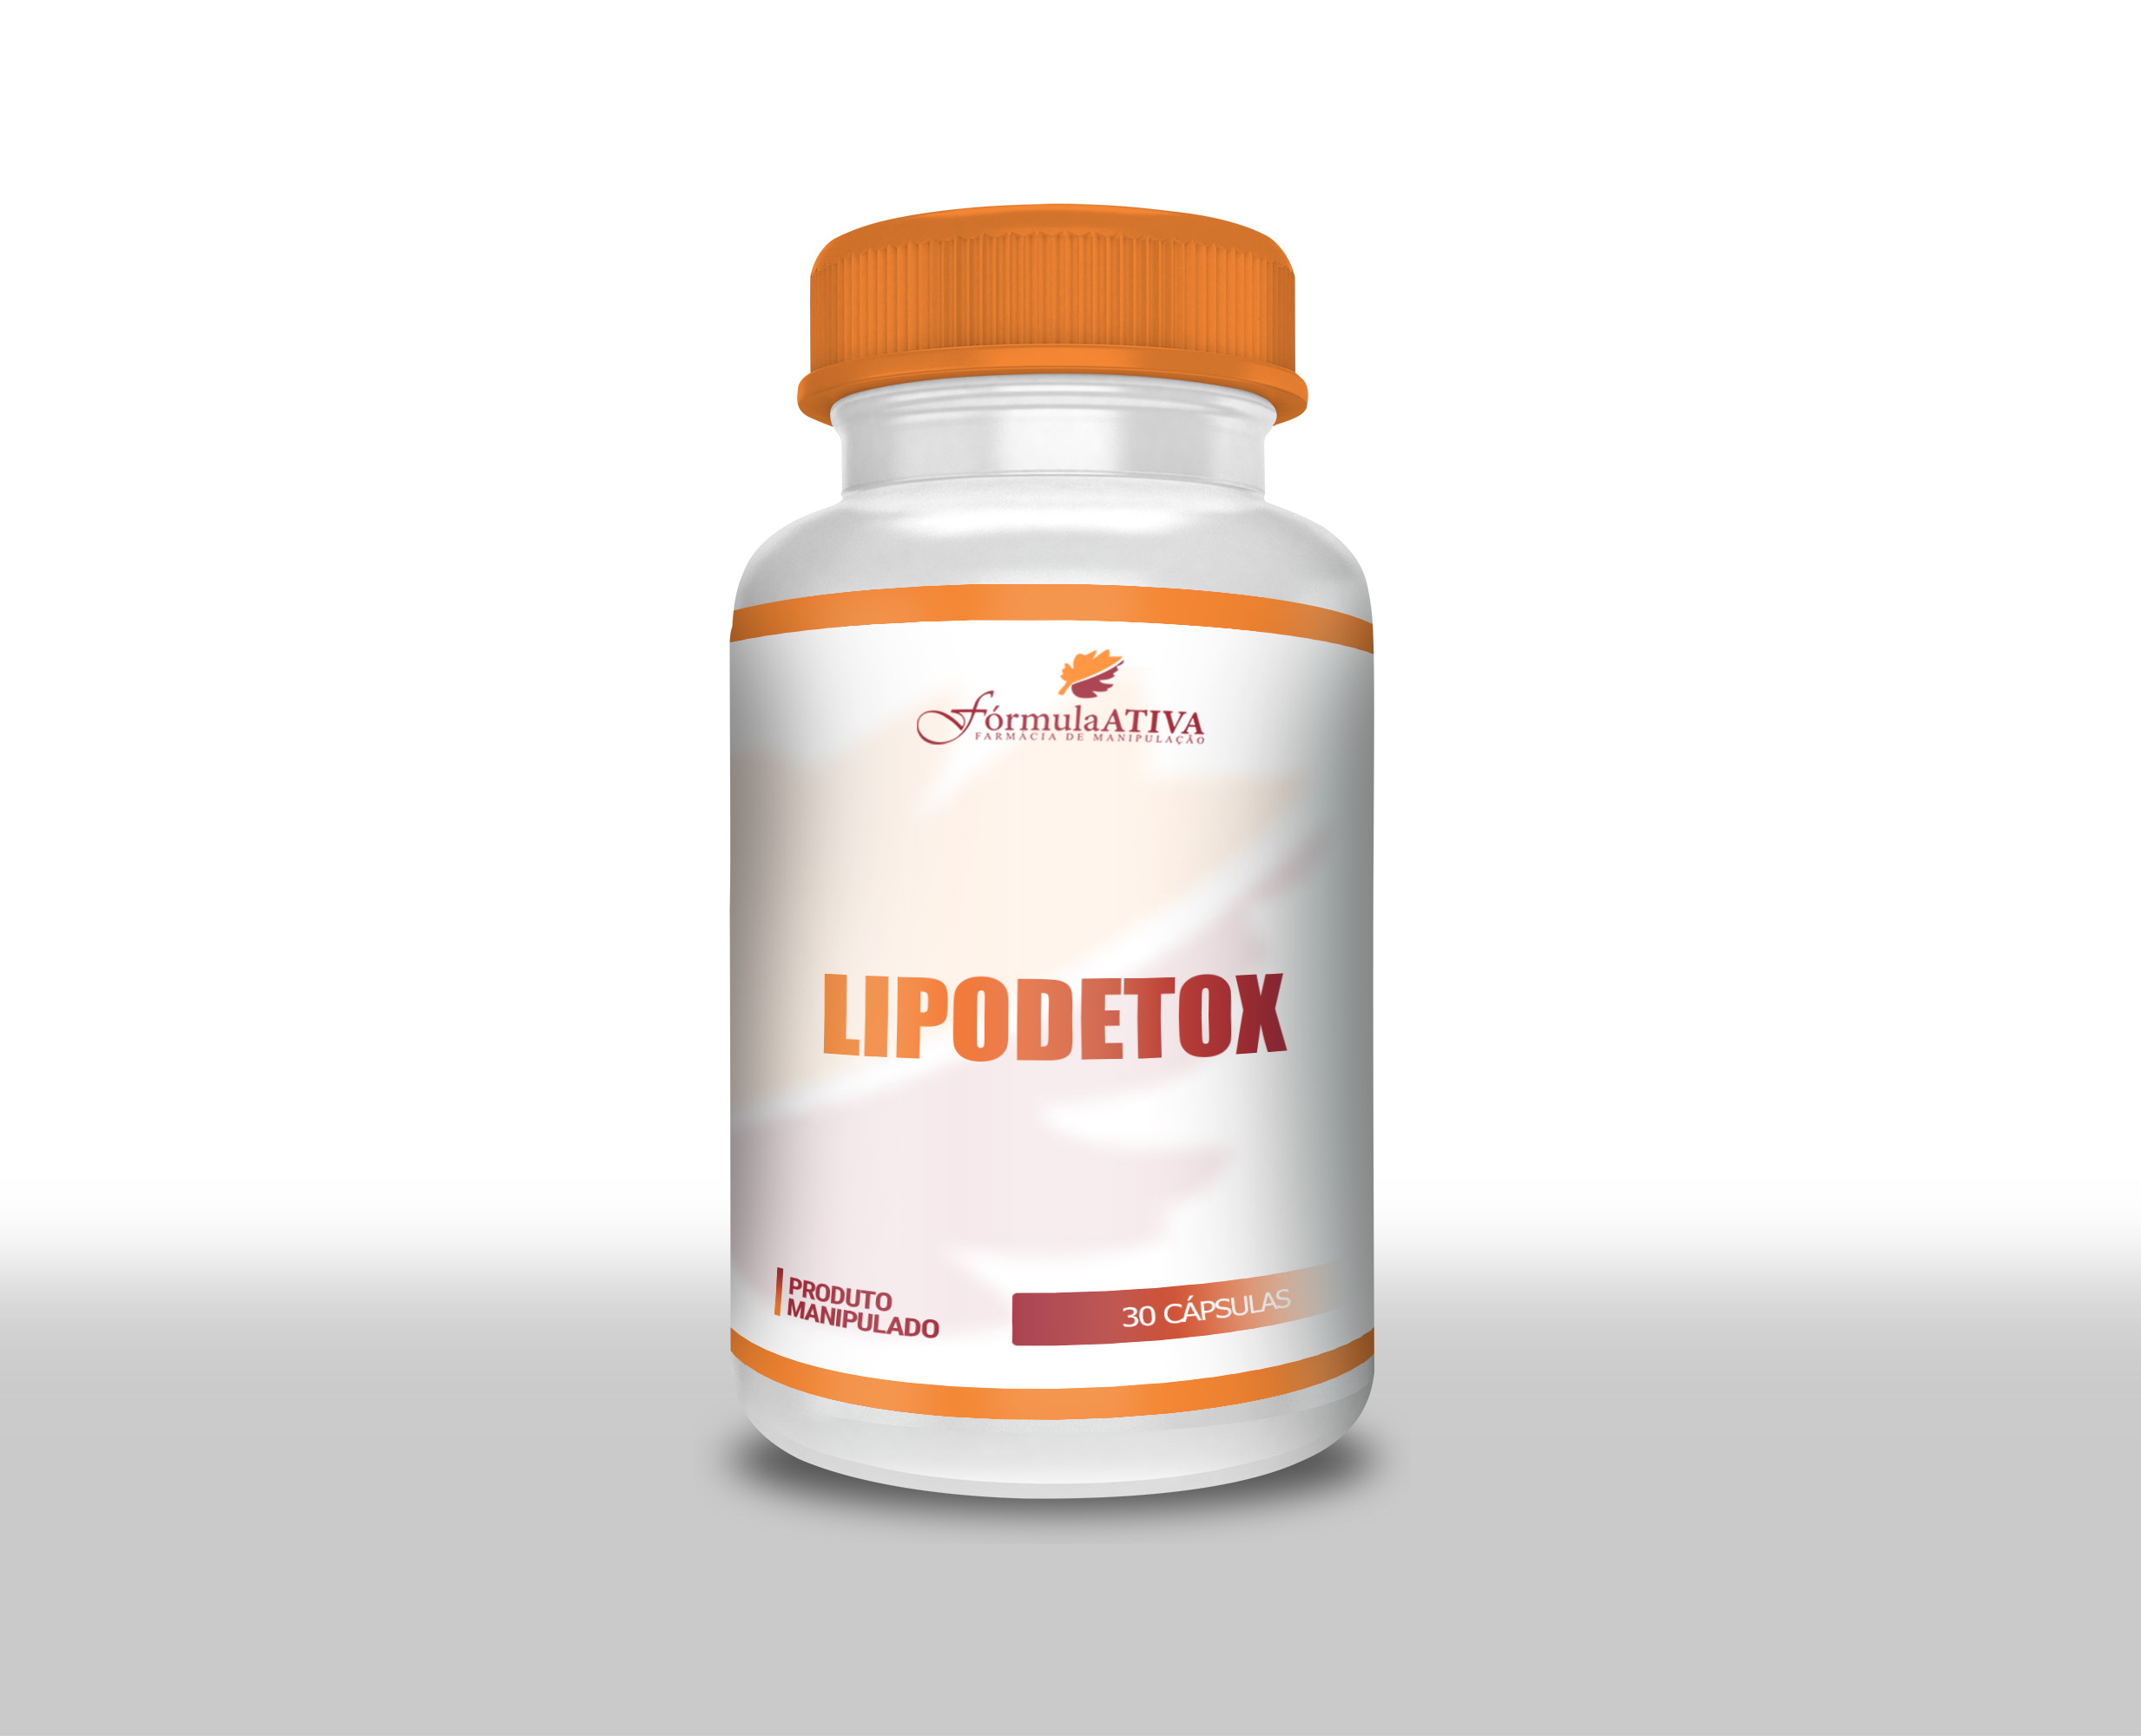 Lipodetox (Composto - 30 doses)